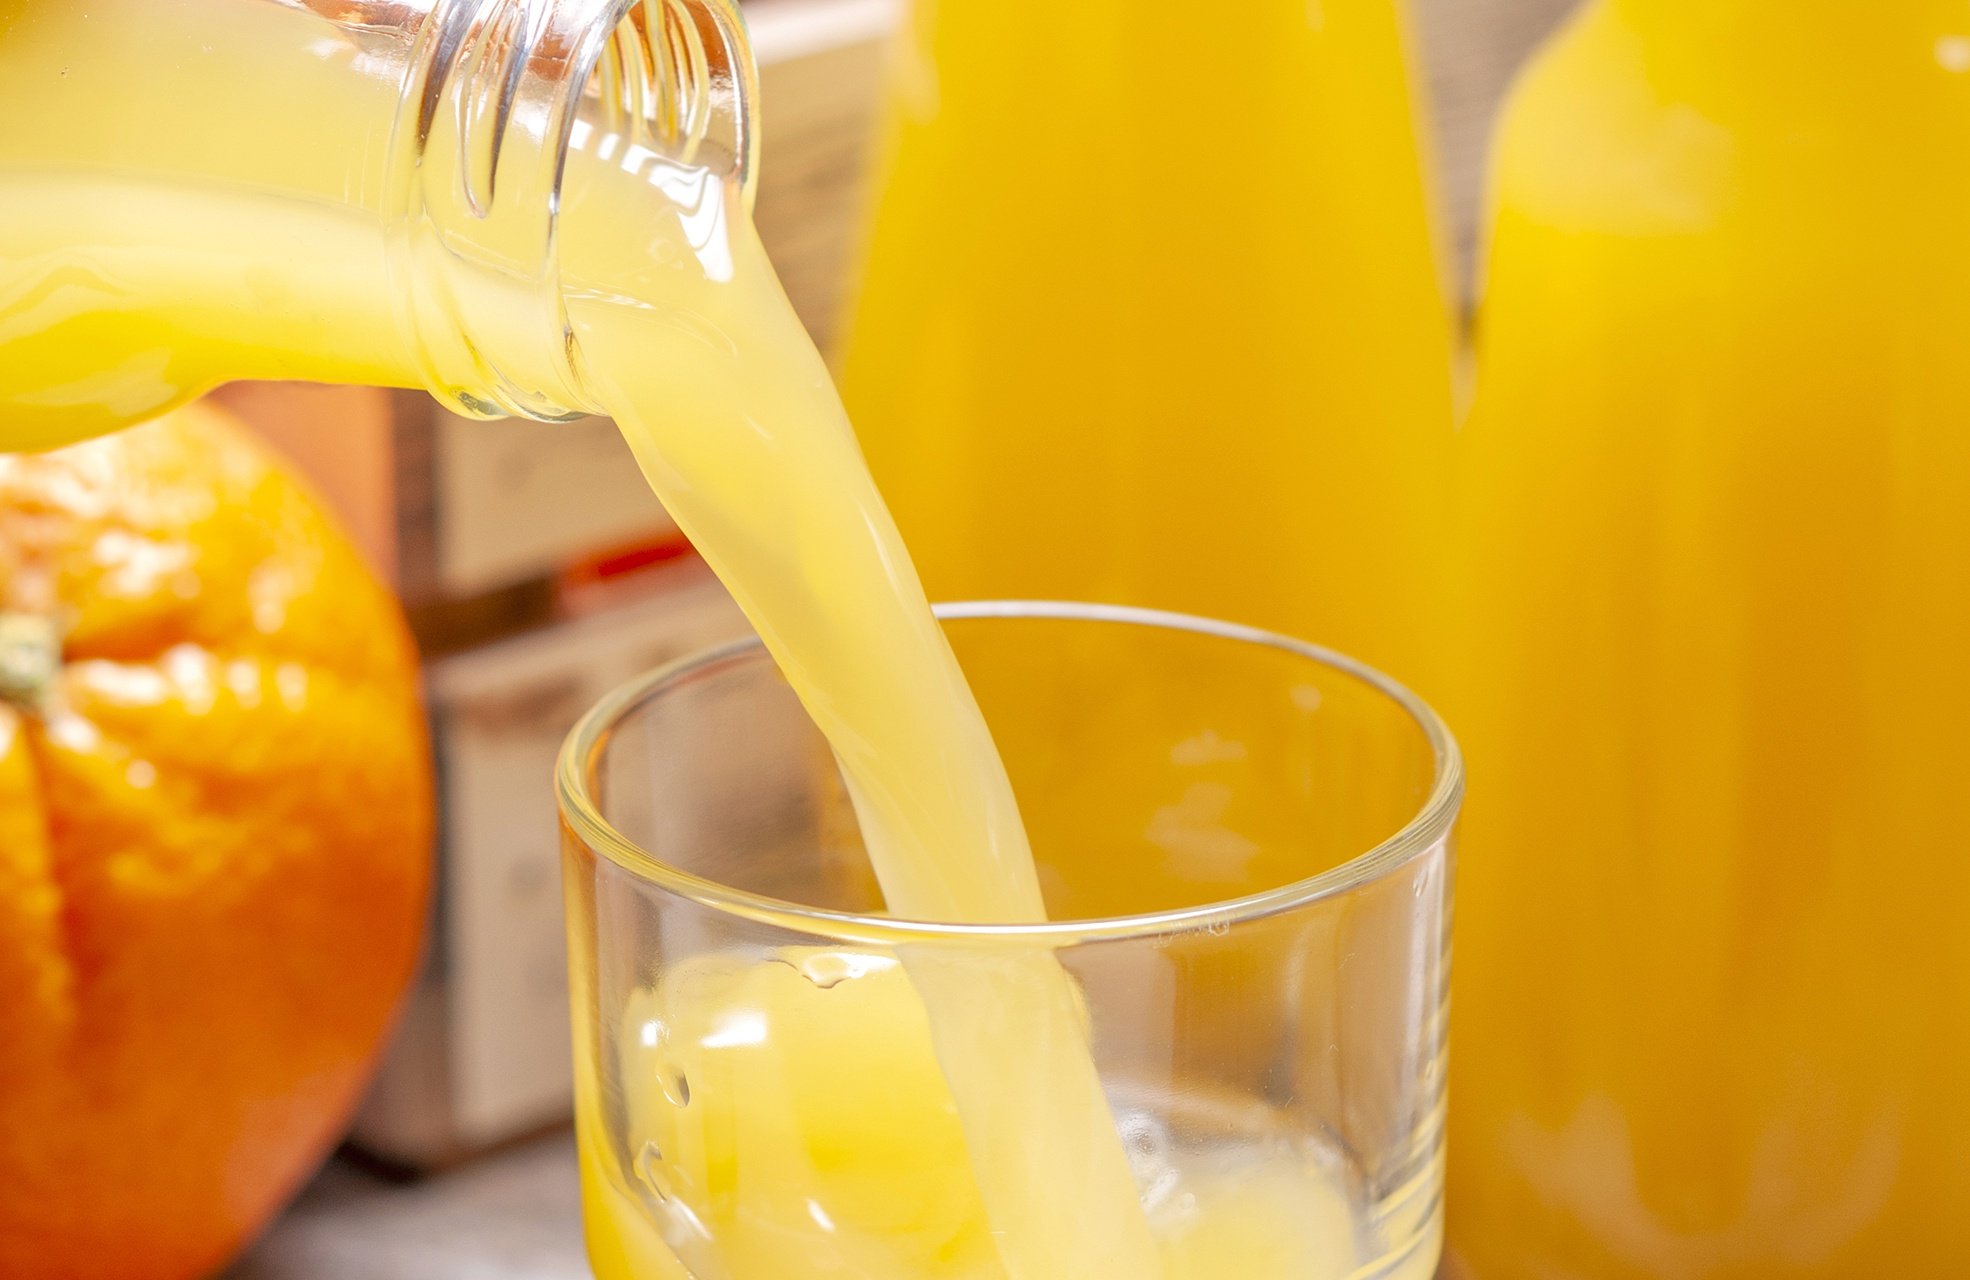 pouring orange juice into glasses